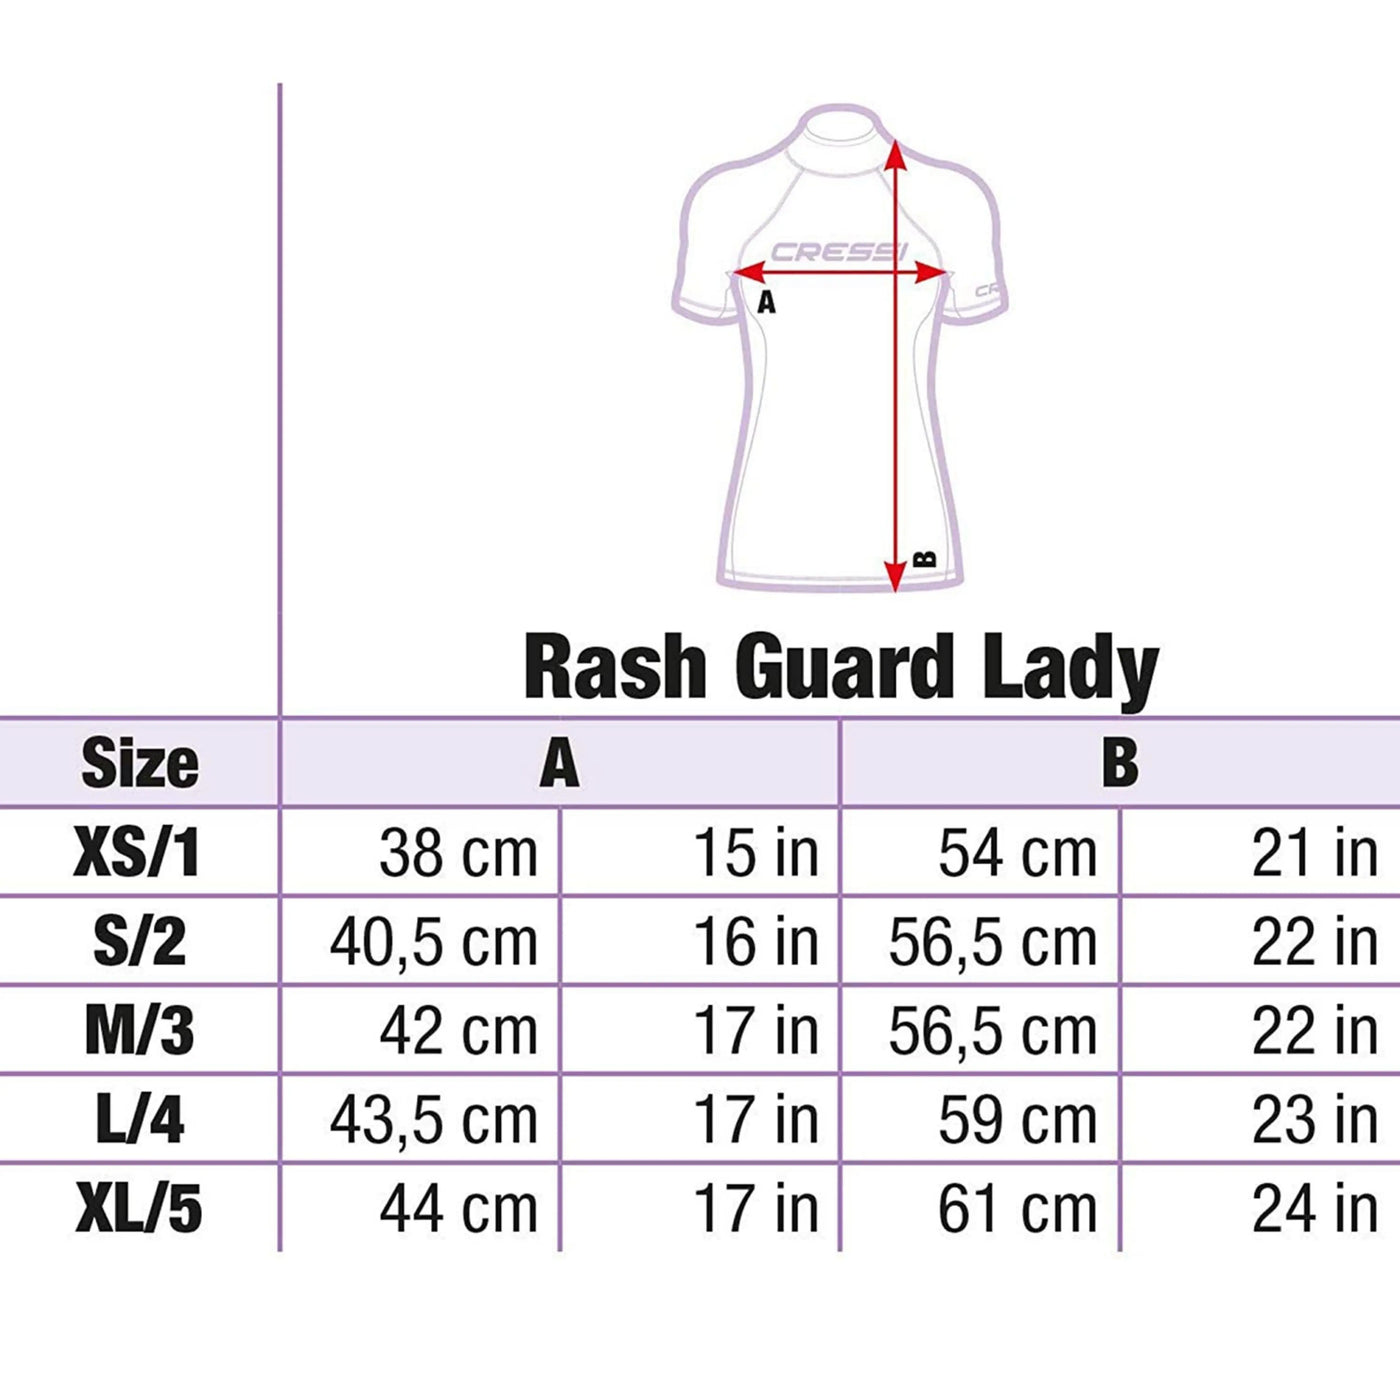 Long Sleeves Rashguard LADY | Cressi Cressi